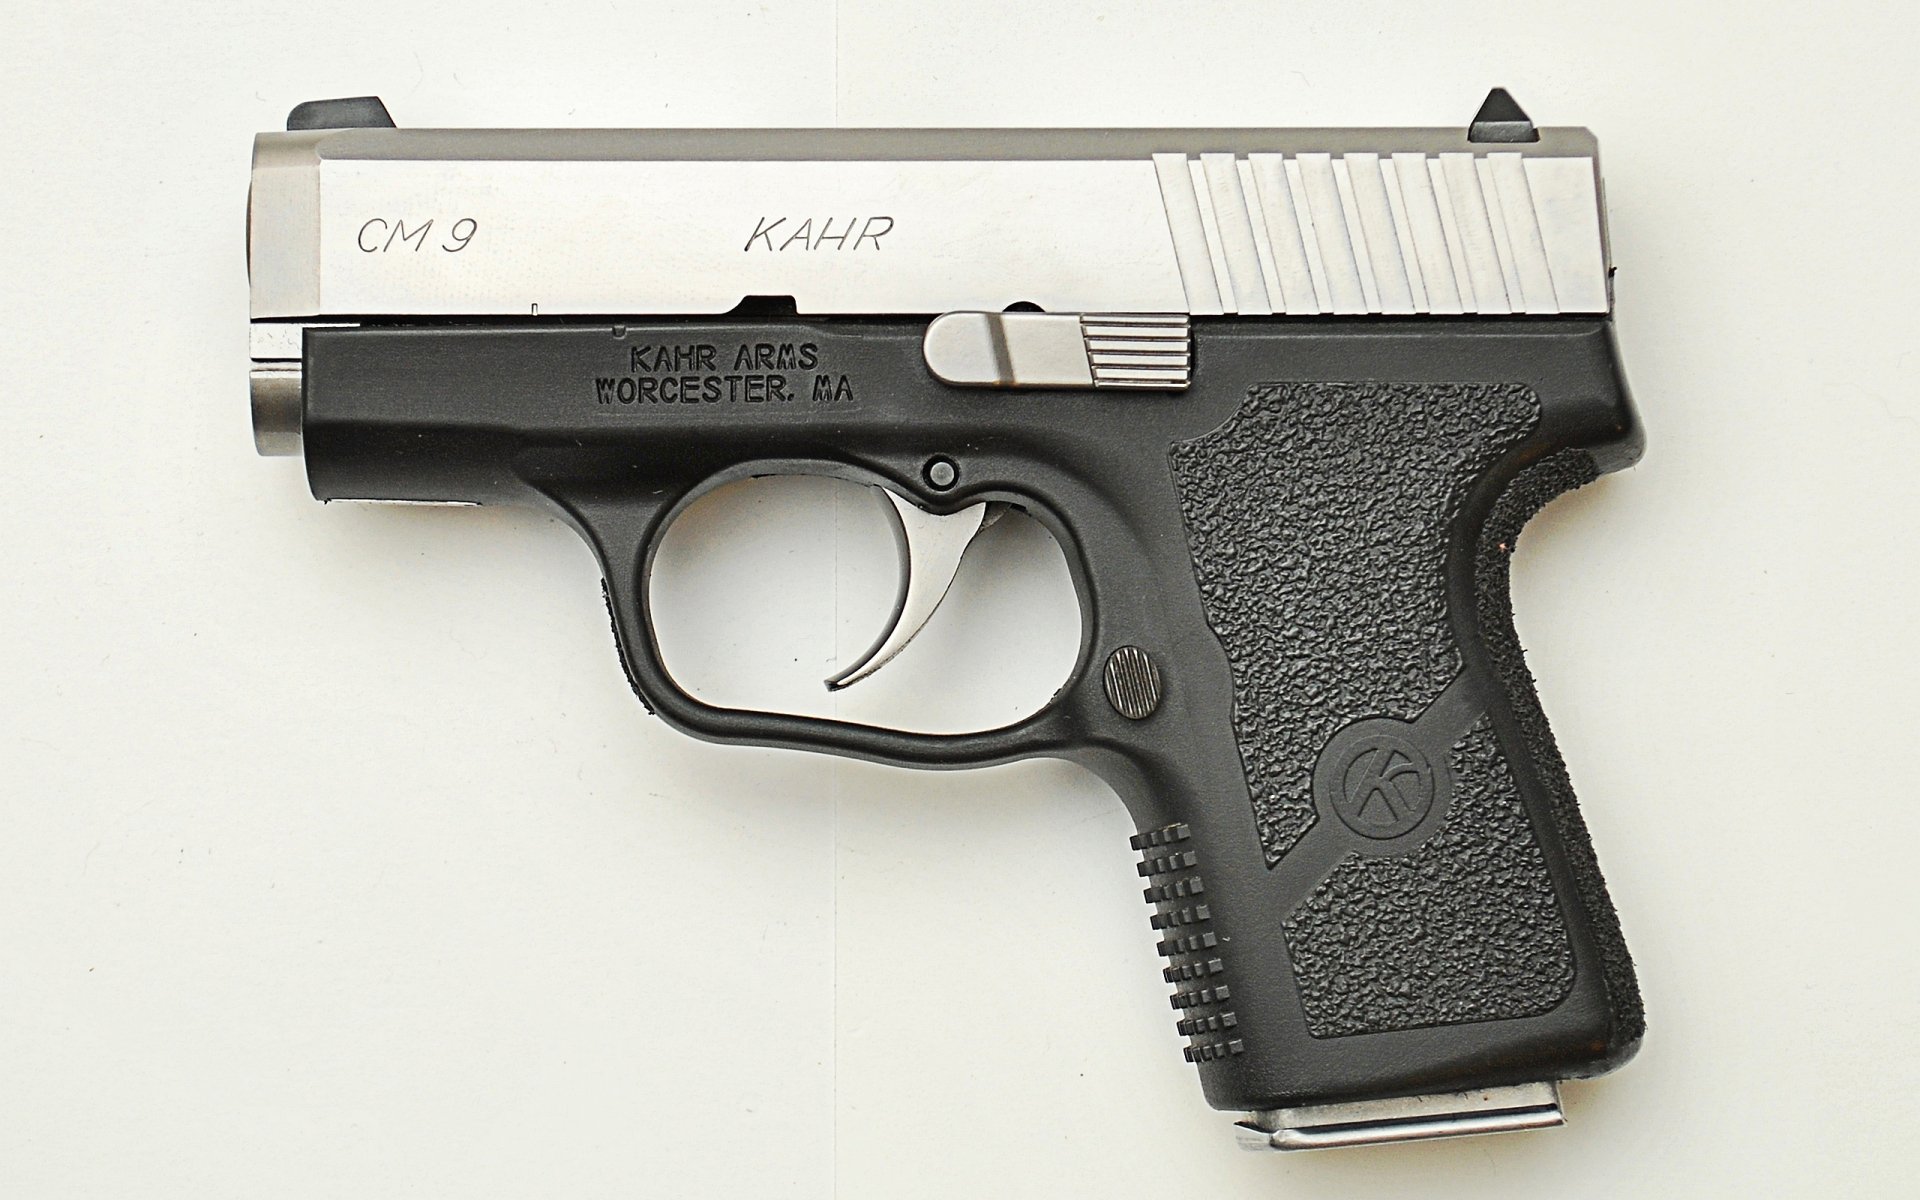 Kahr Cm9 Pistol HD Wallpapers | Background Images